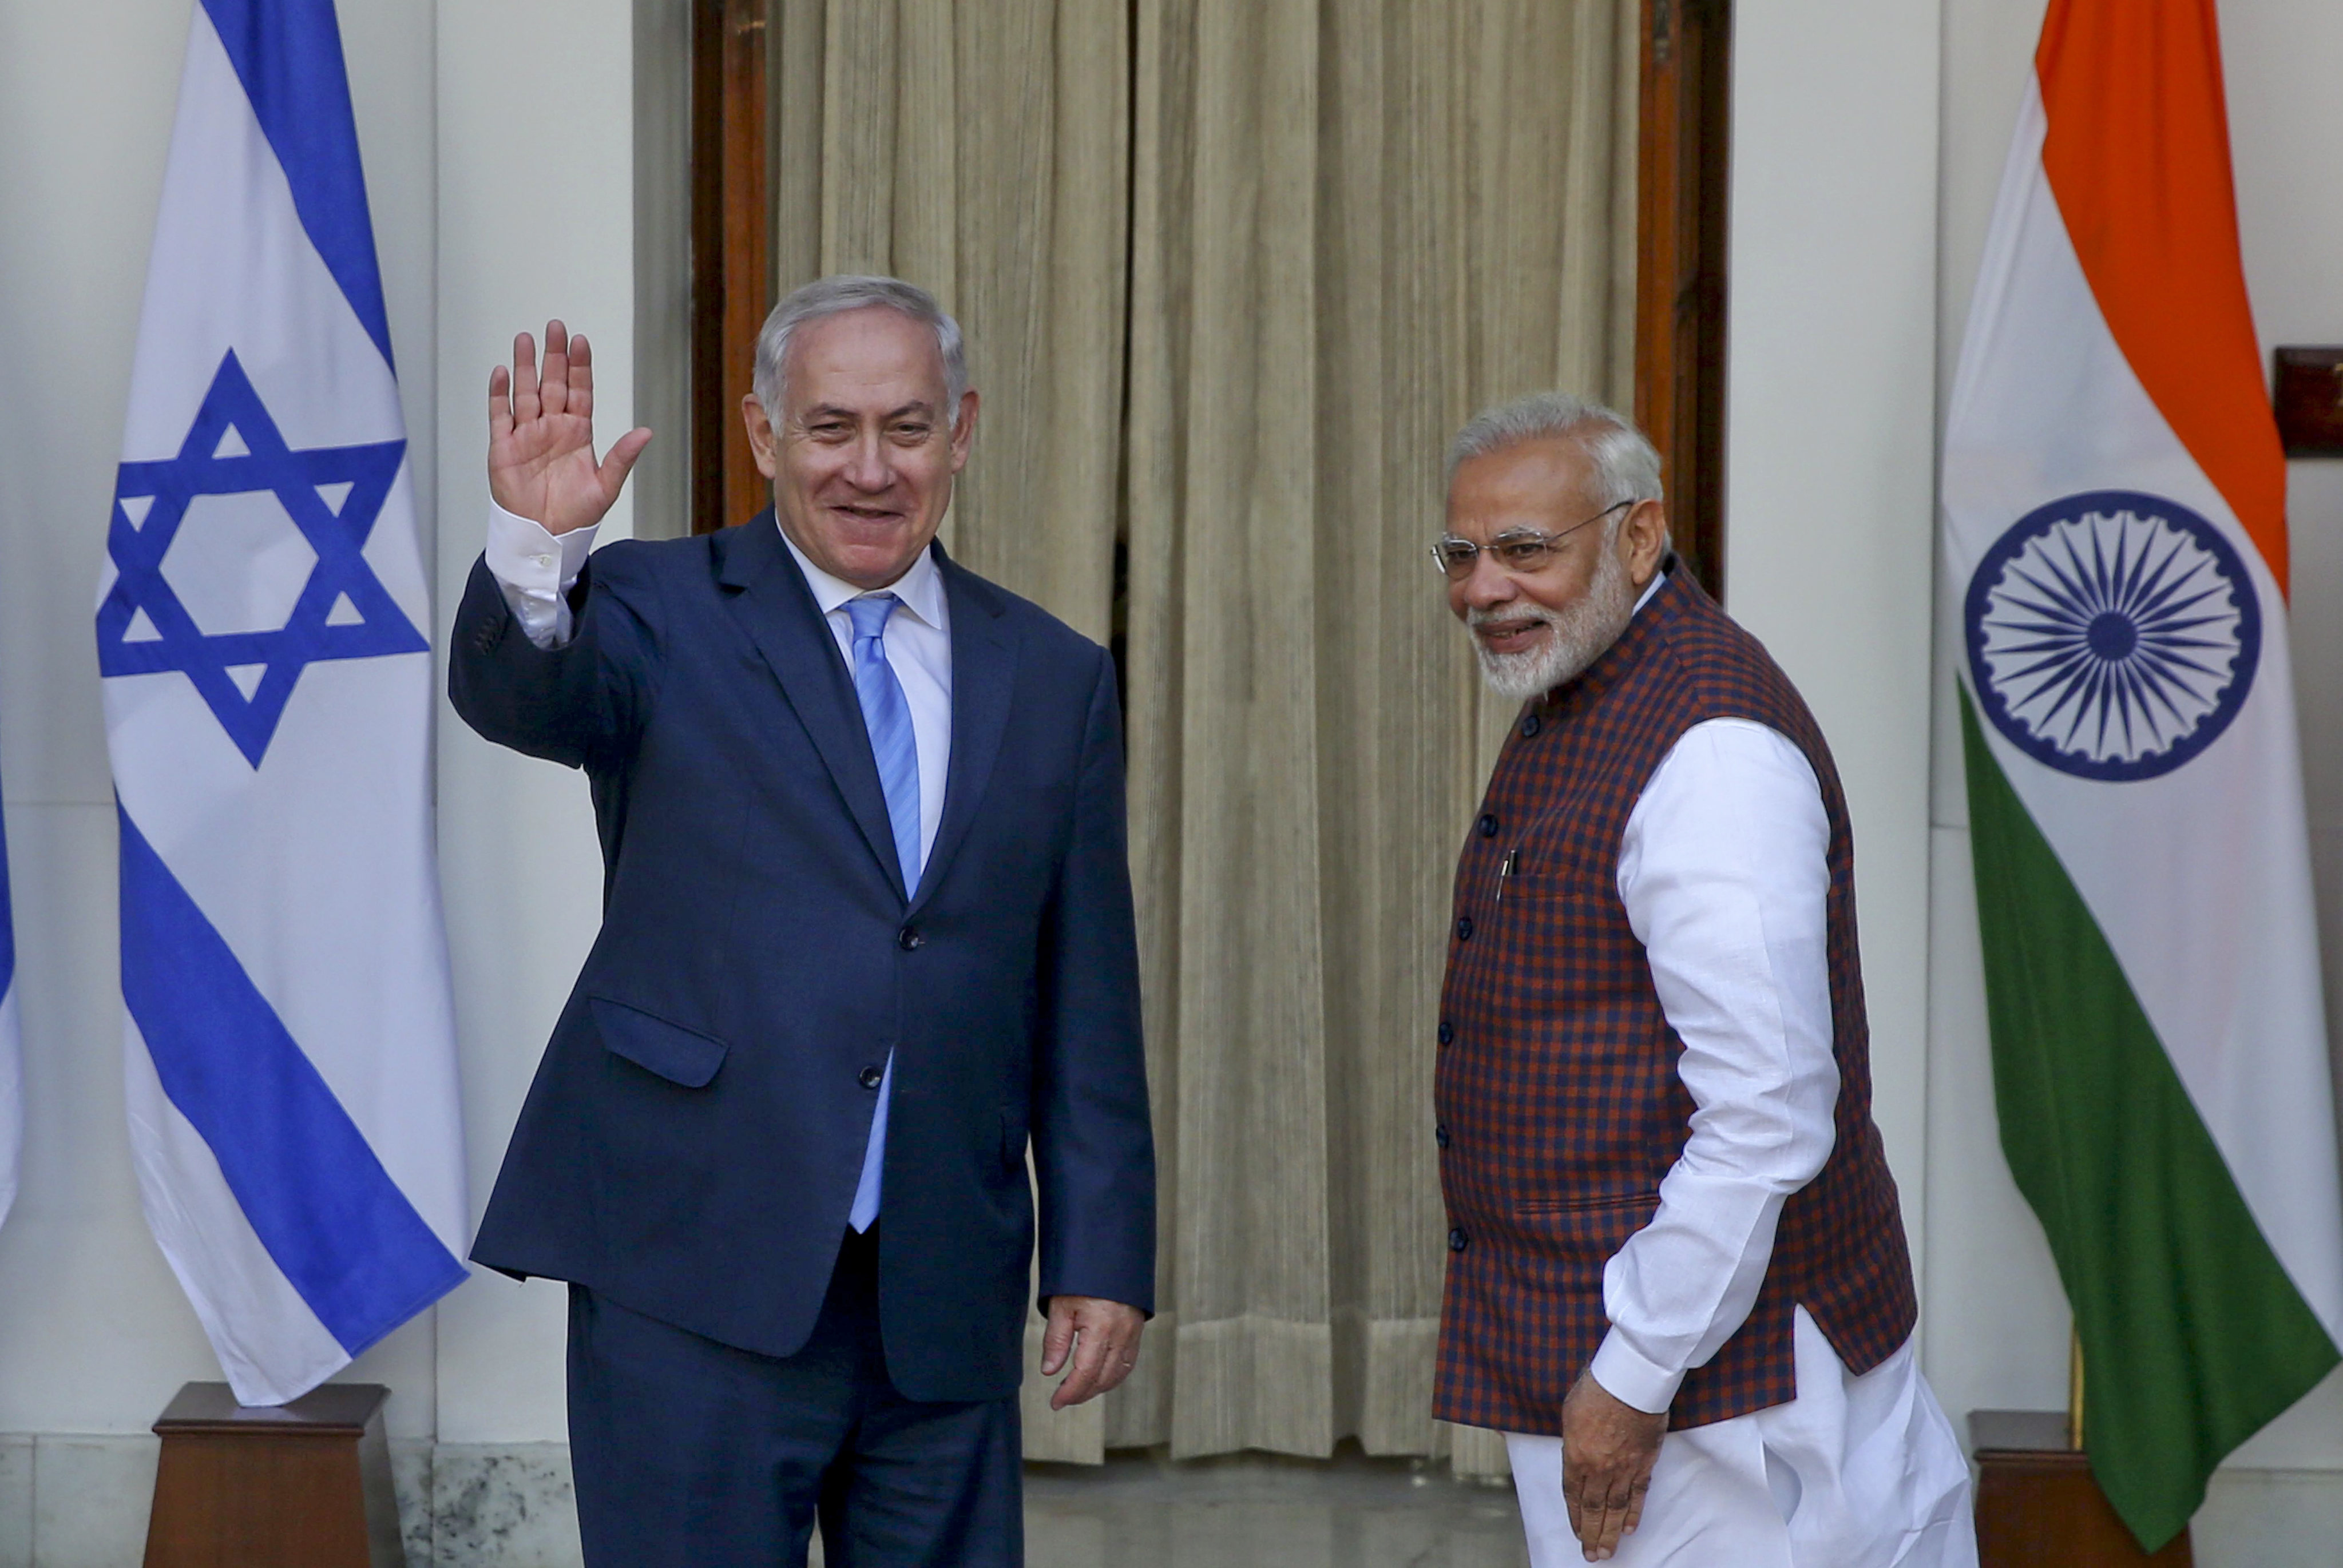 India’s Prime Minister Narendra Modi (right) and Israeli Prime Minister Benjamin Netanyahu meet in New Delhi on January 15, 2018. Photo: AP